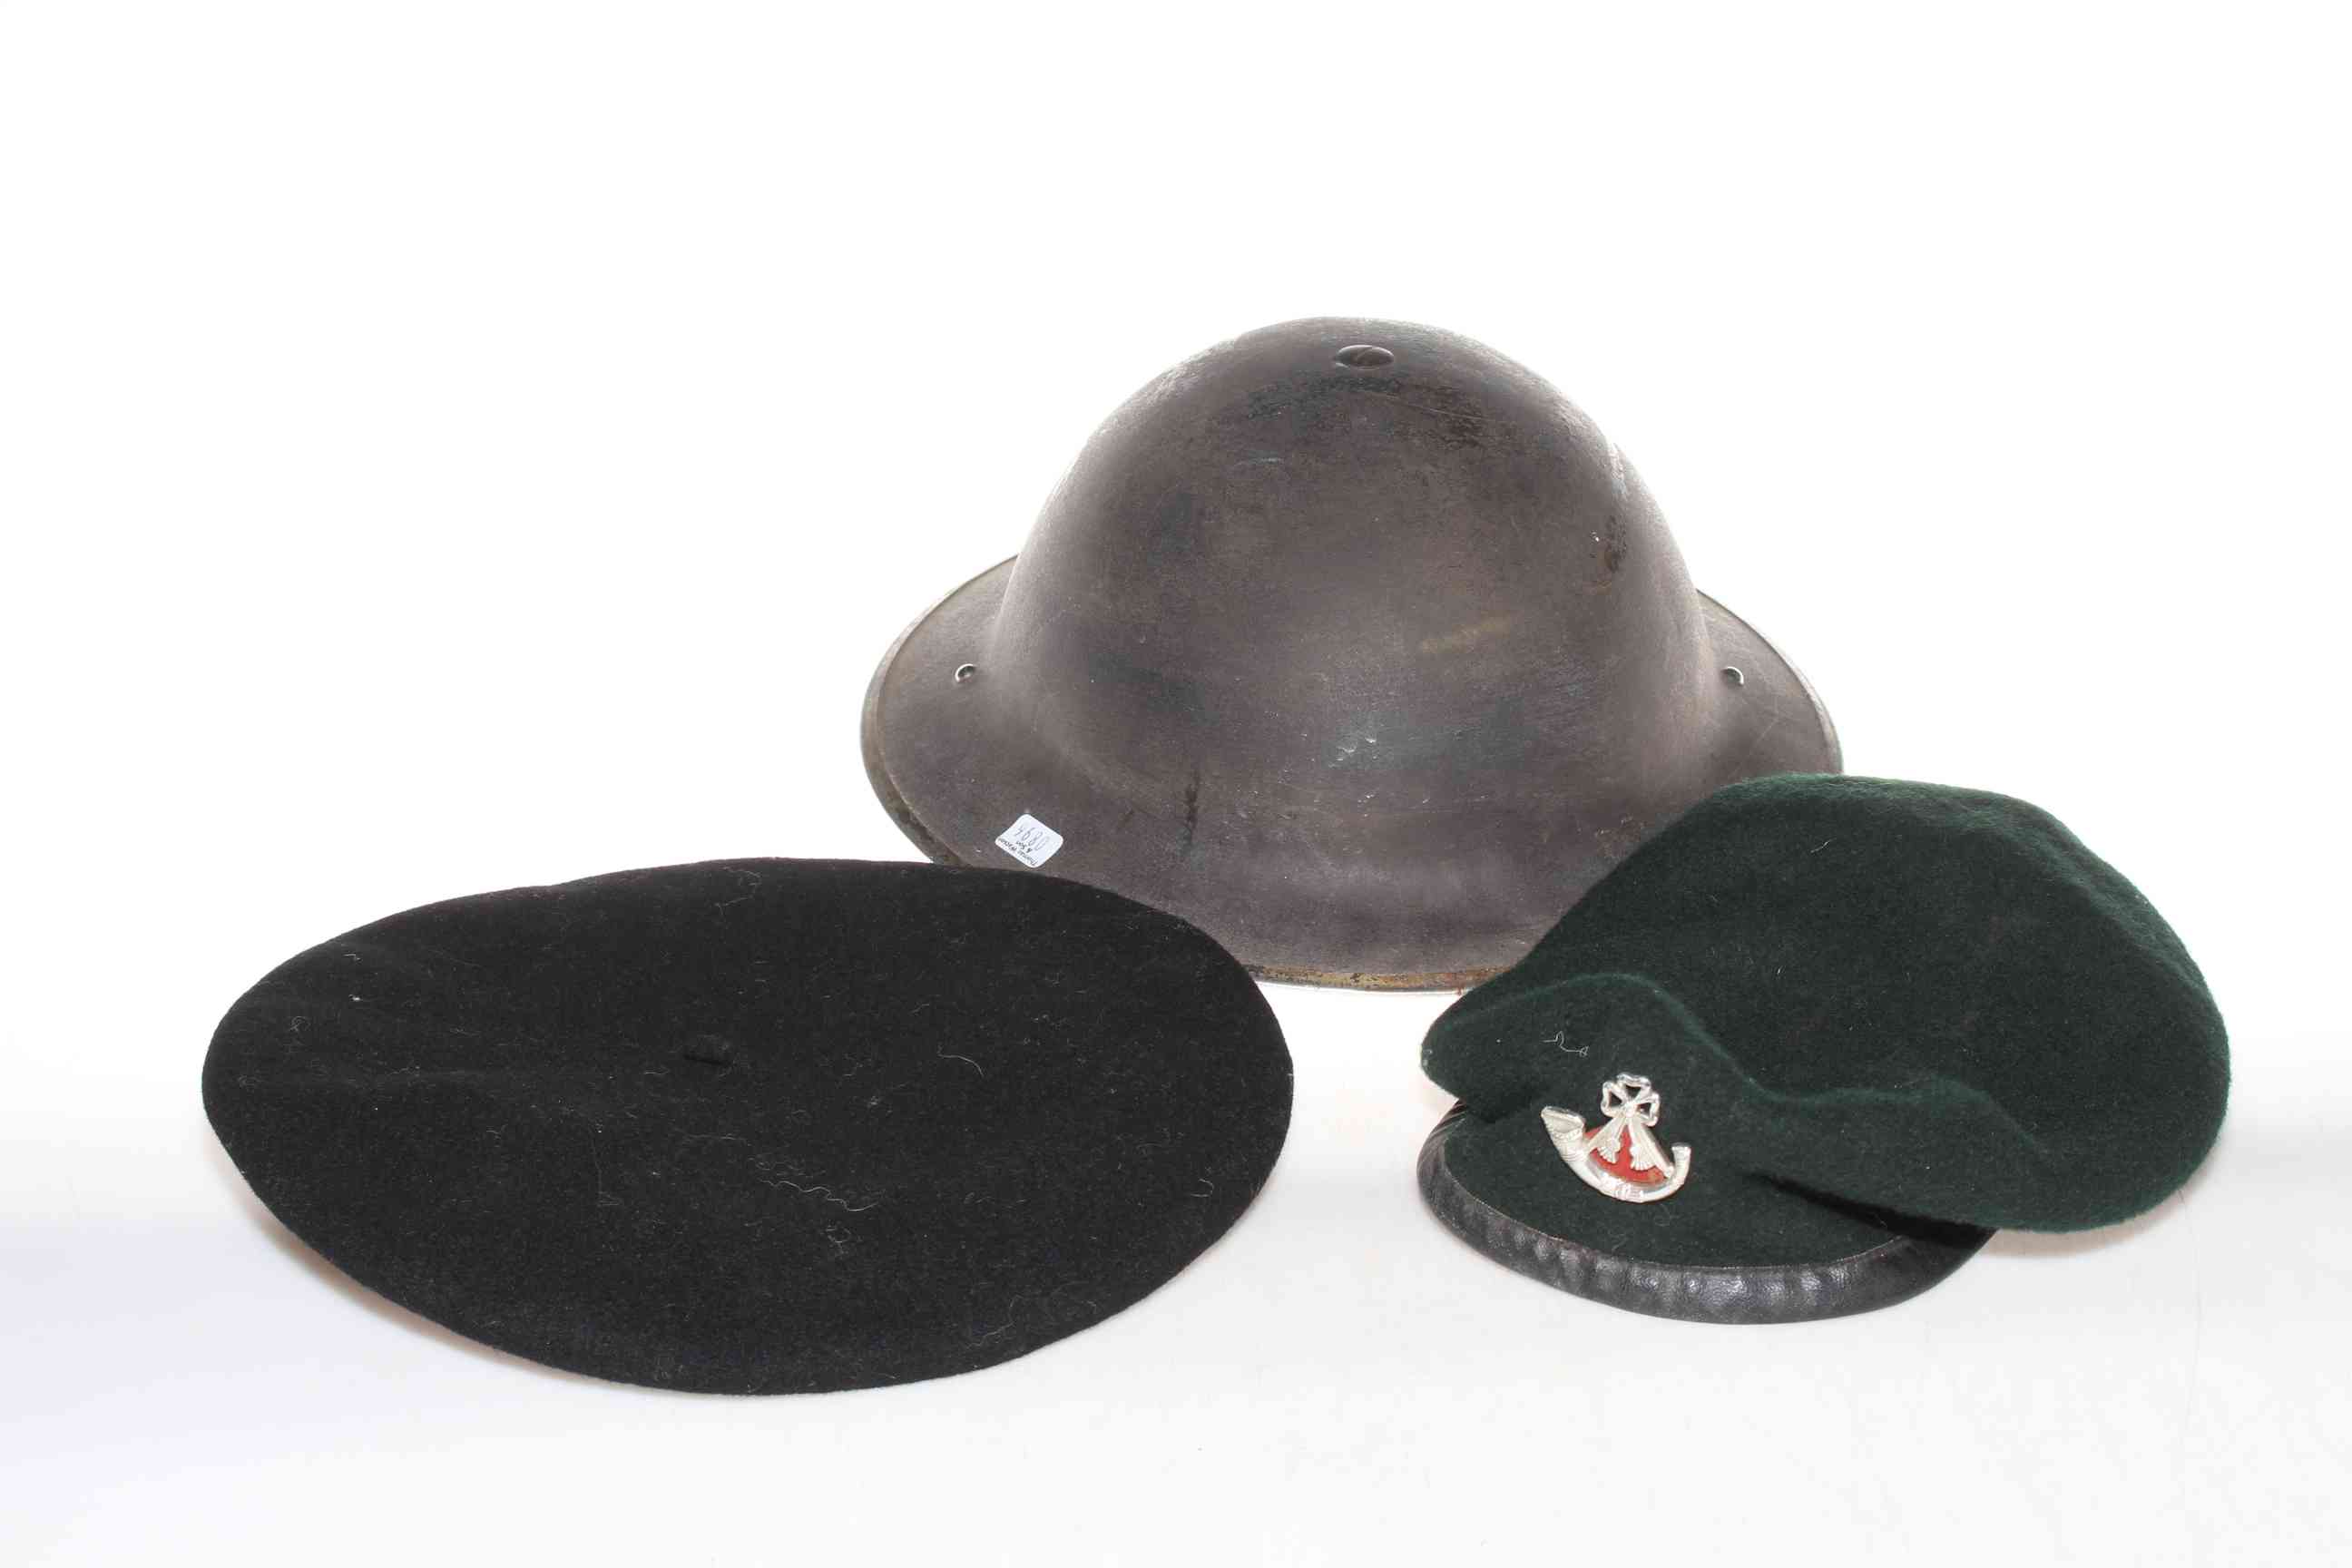 Brodie helmet and two caps.